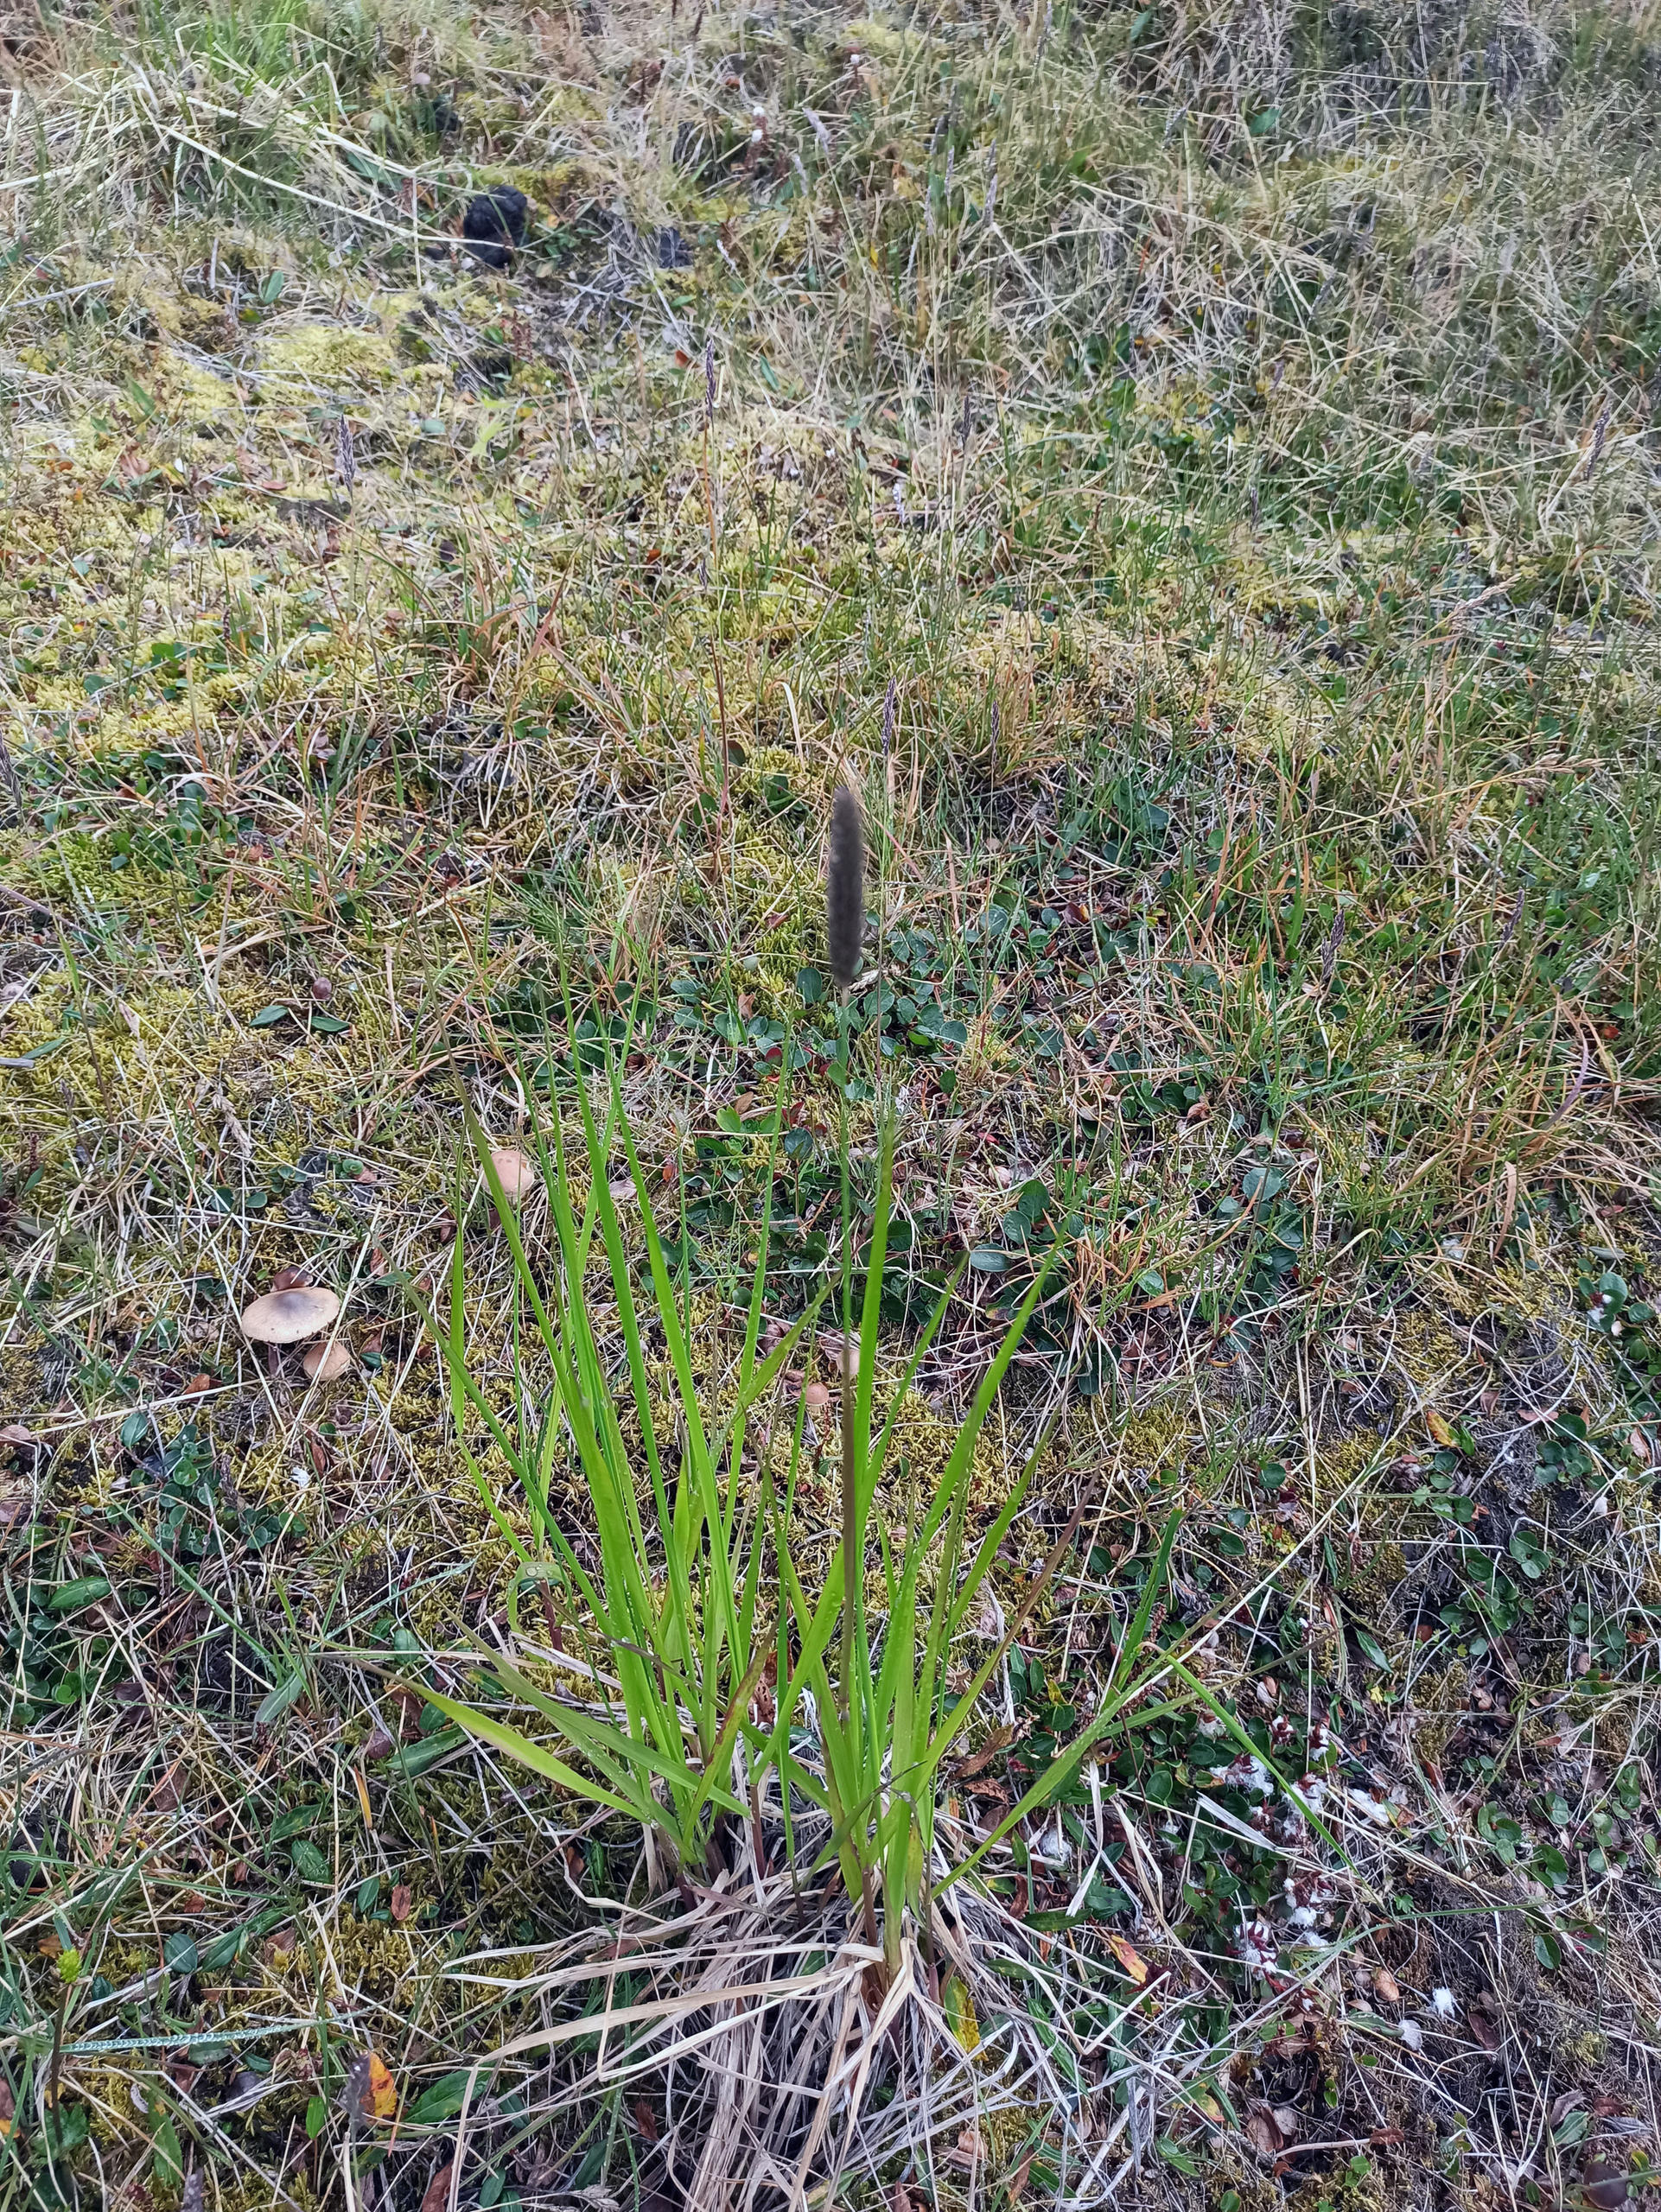 Non-native grass species (Alopecurus pratensis) invading the natural tundra